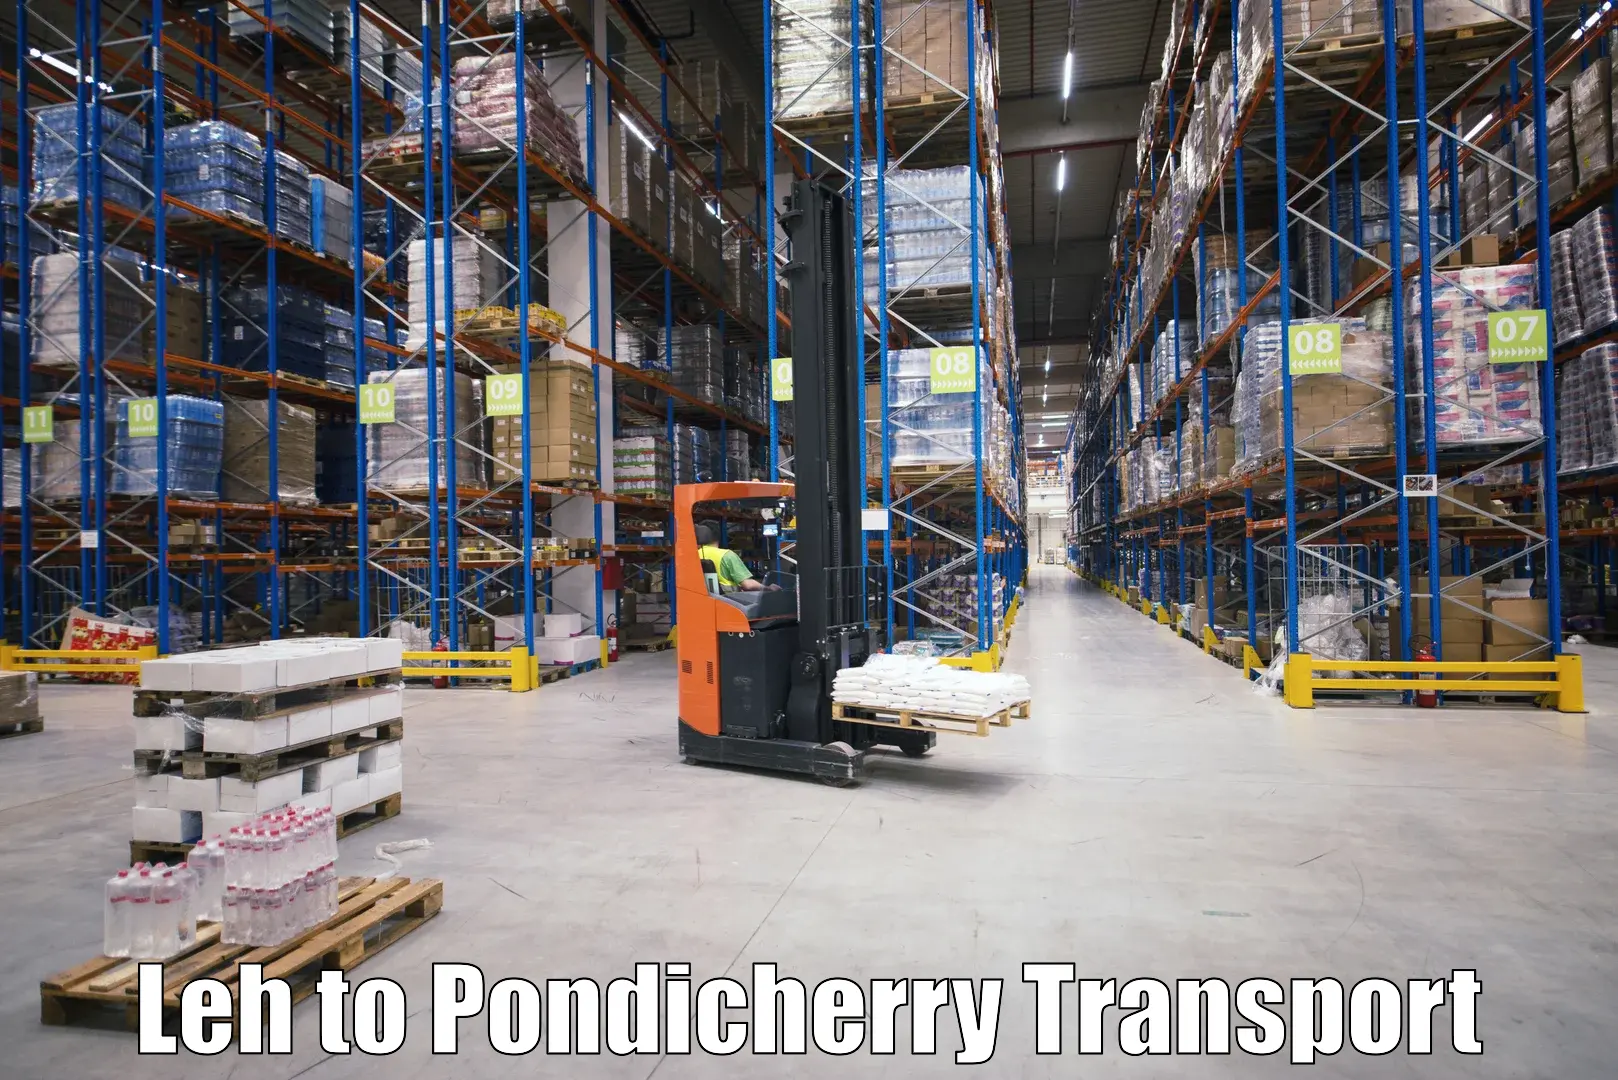 Delivery service Leh to Pondicherry